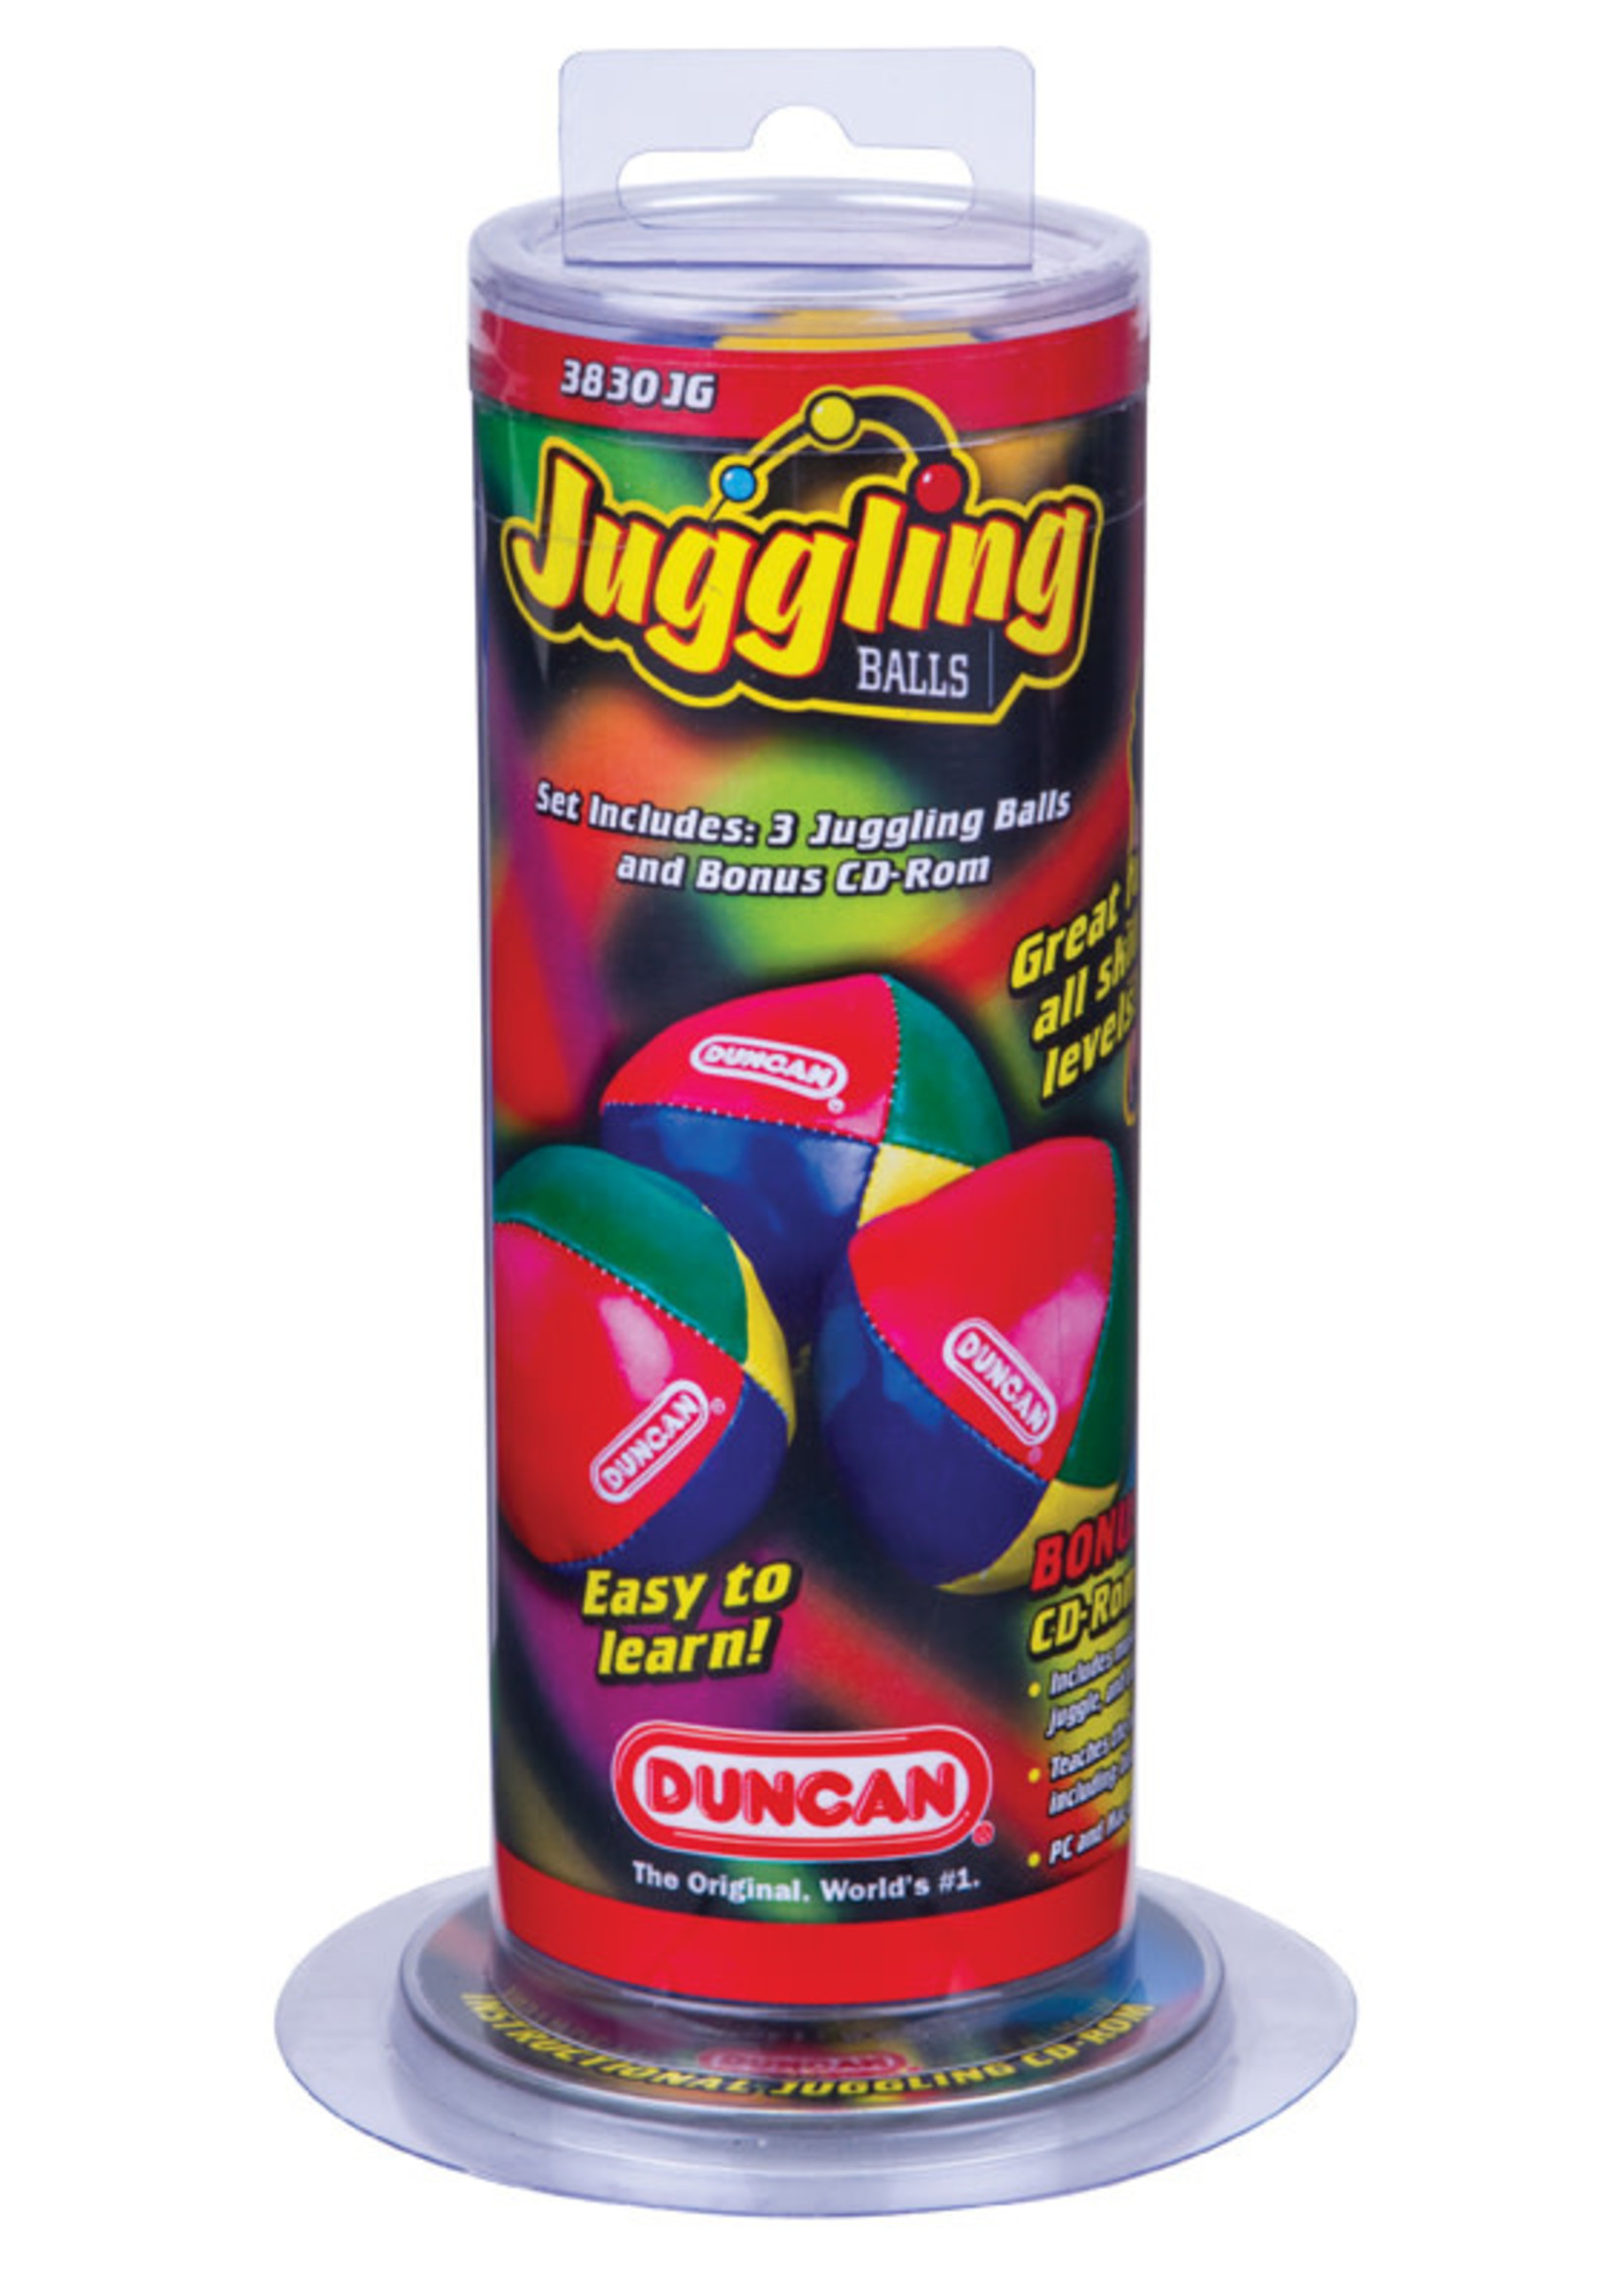 Duncan Juggling Balls Multi Color